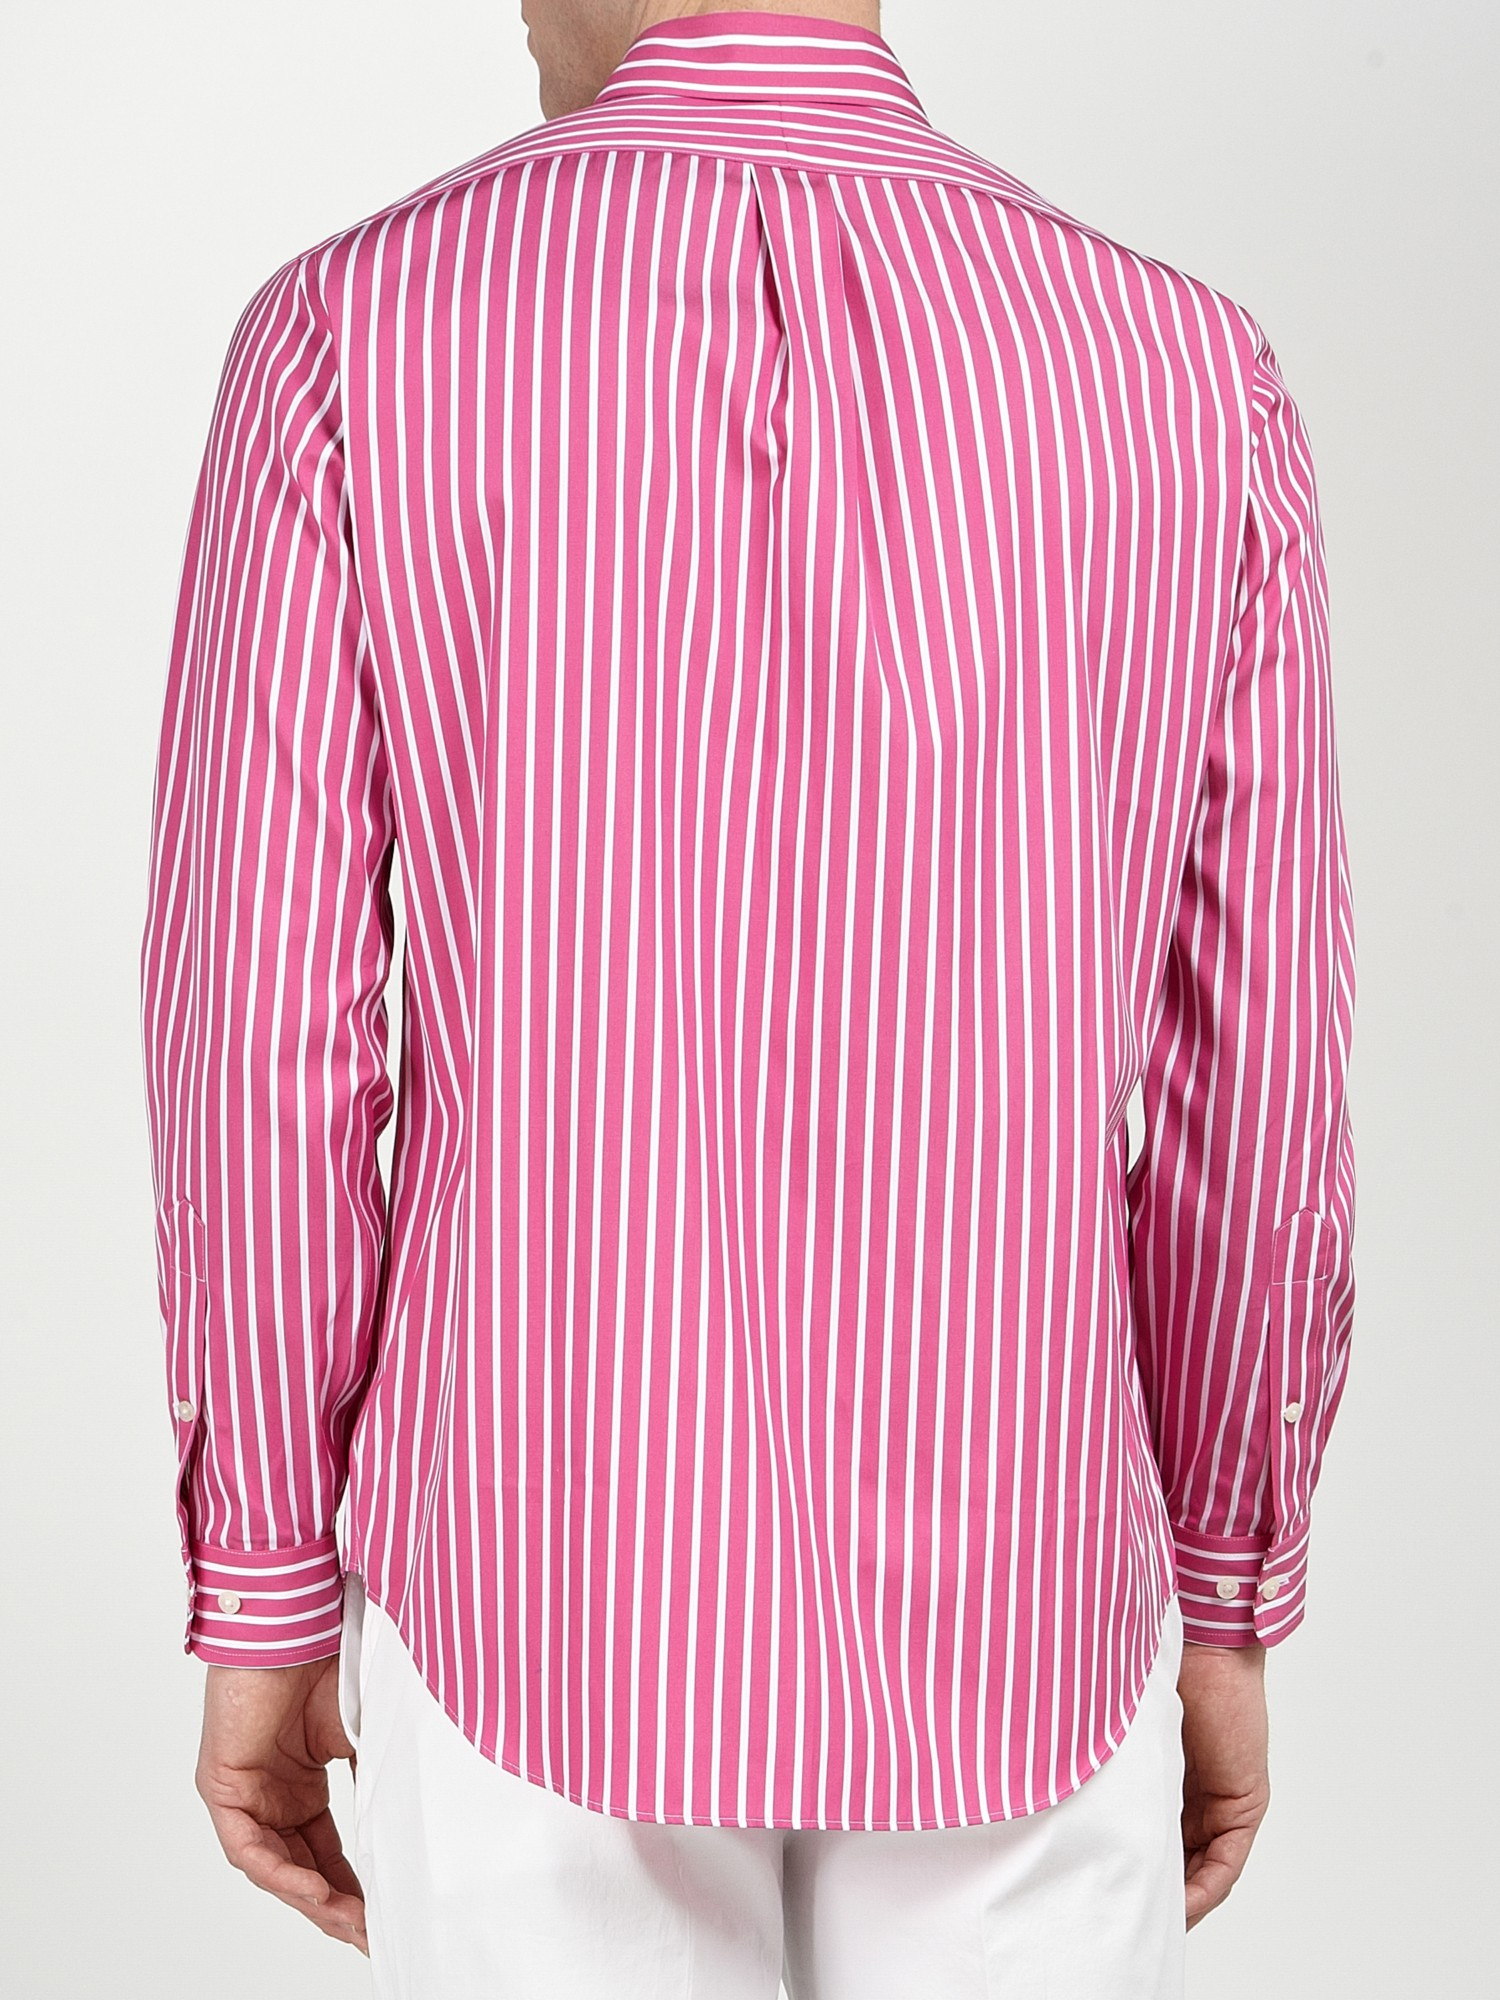 Polo Ralph Lauren Striped Poplin Shirt in Pink for Men - Lyst